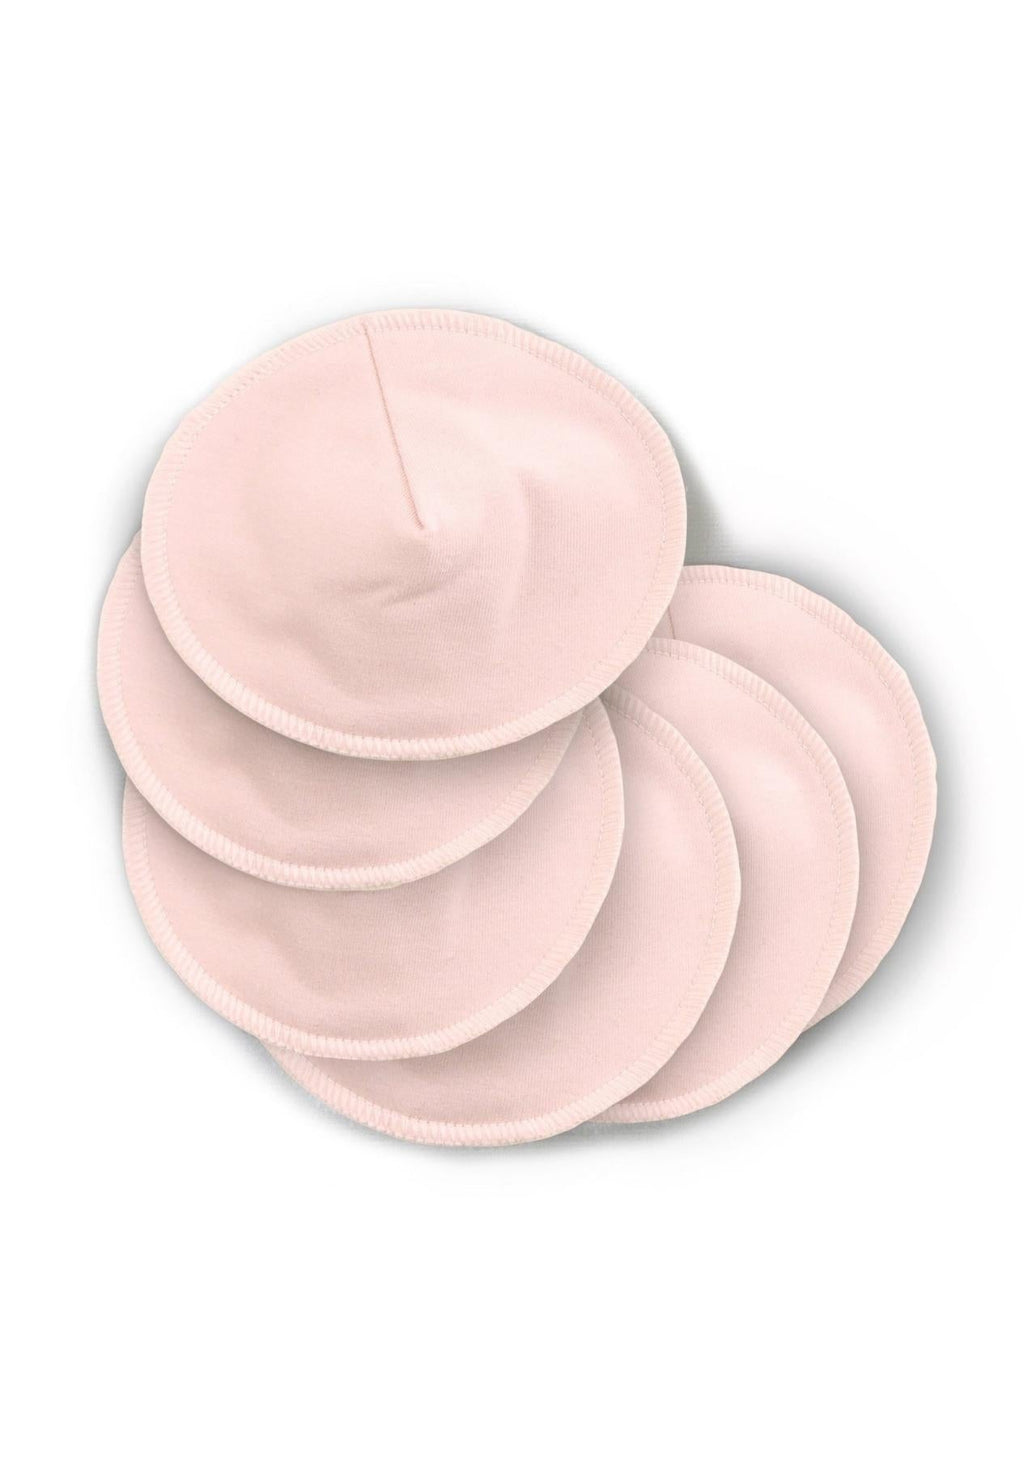 Bravado Designs Reusable Leak Resistant Nursing Pads in Petal Pink